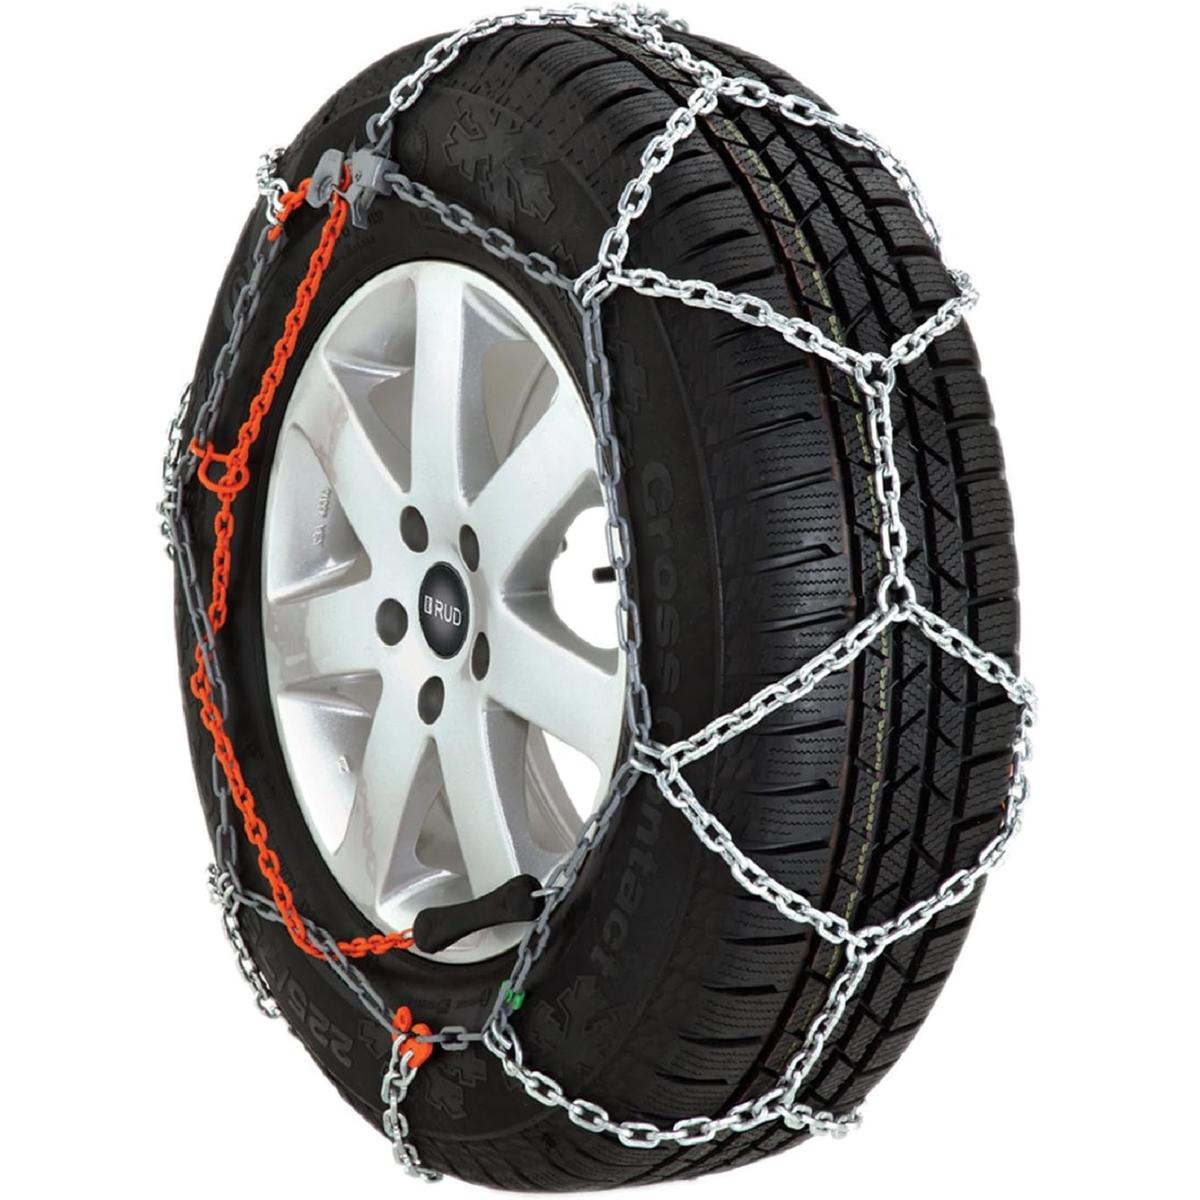 Grip 195/60R13 Passenger Vehicle Tire Chains